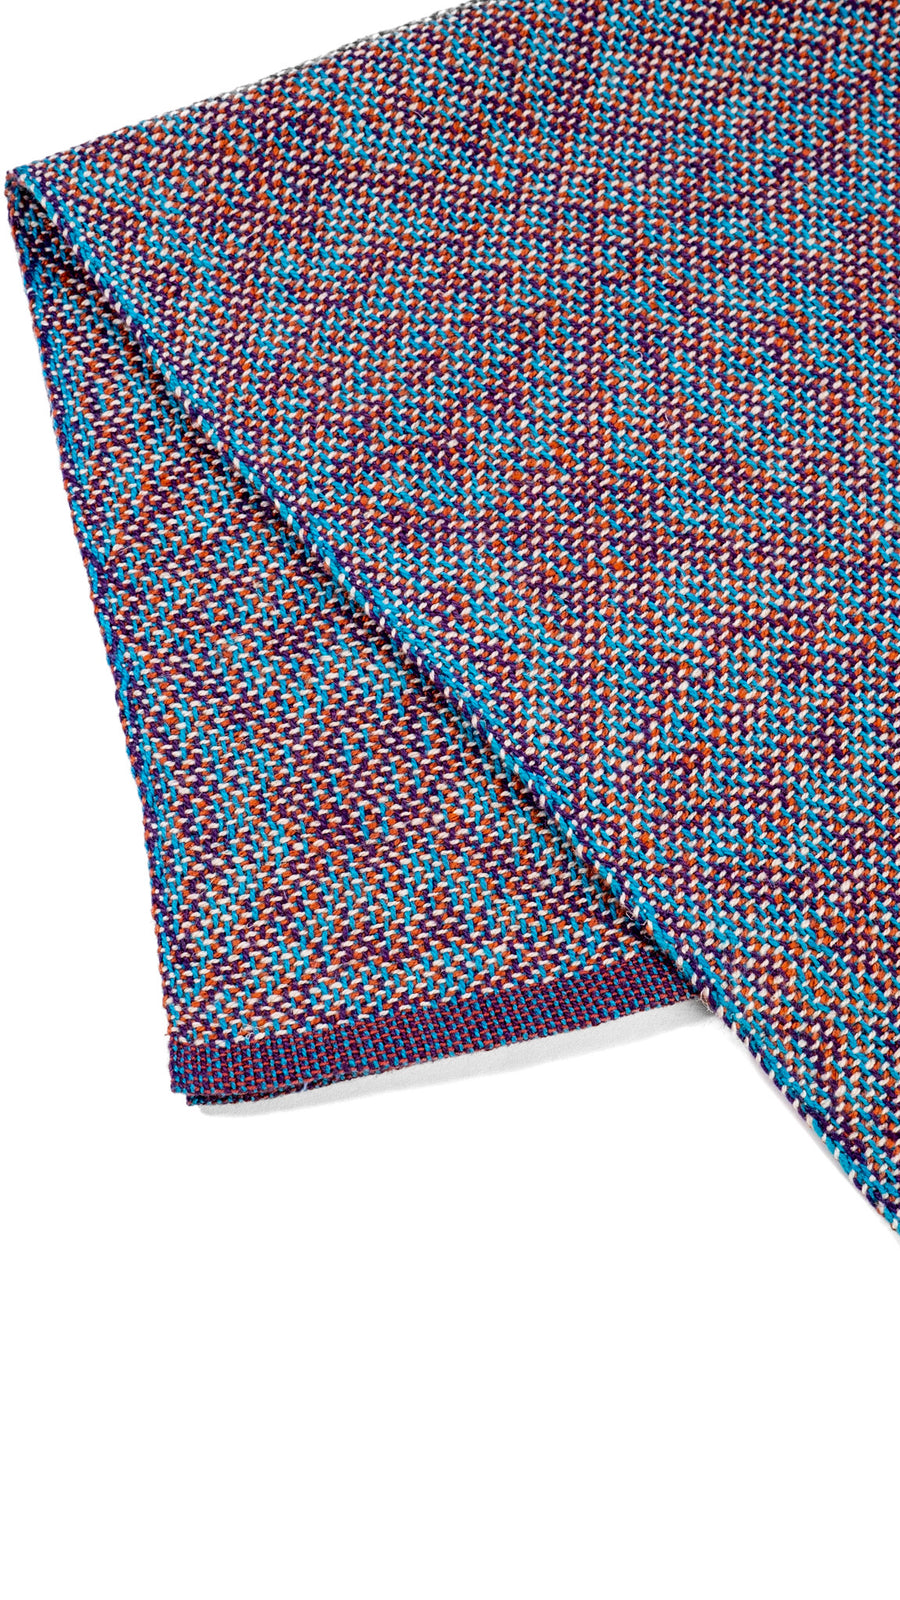 Parachute-Rust-Turquoise-Natural Handwoven Towel by Fiber Art Designs